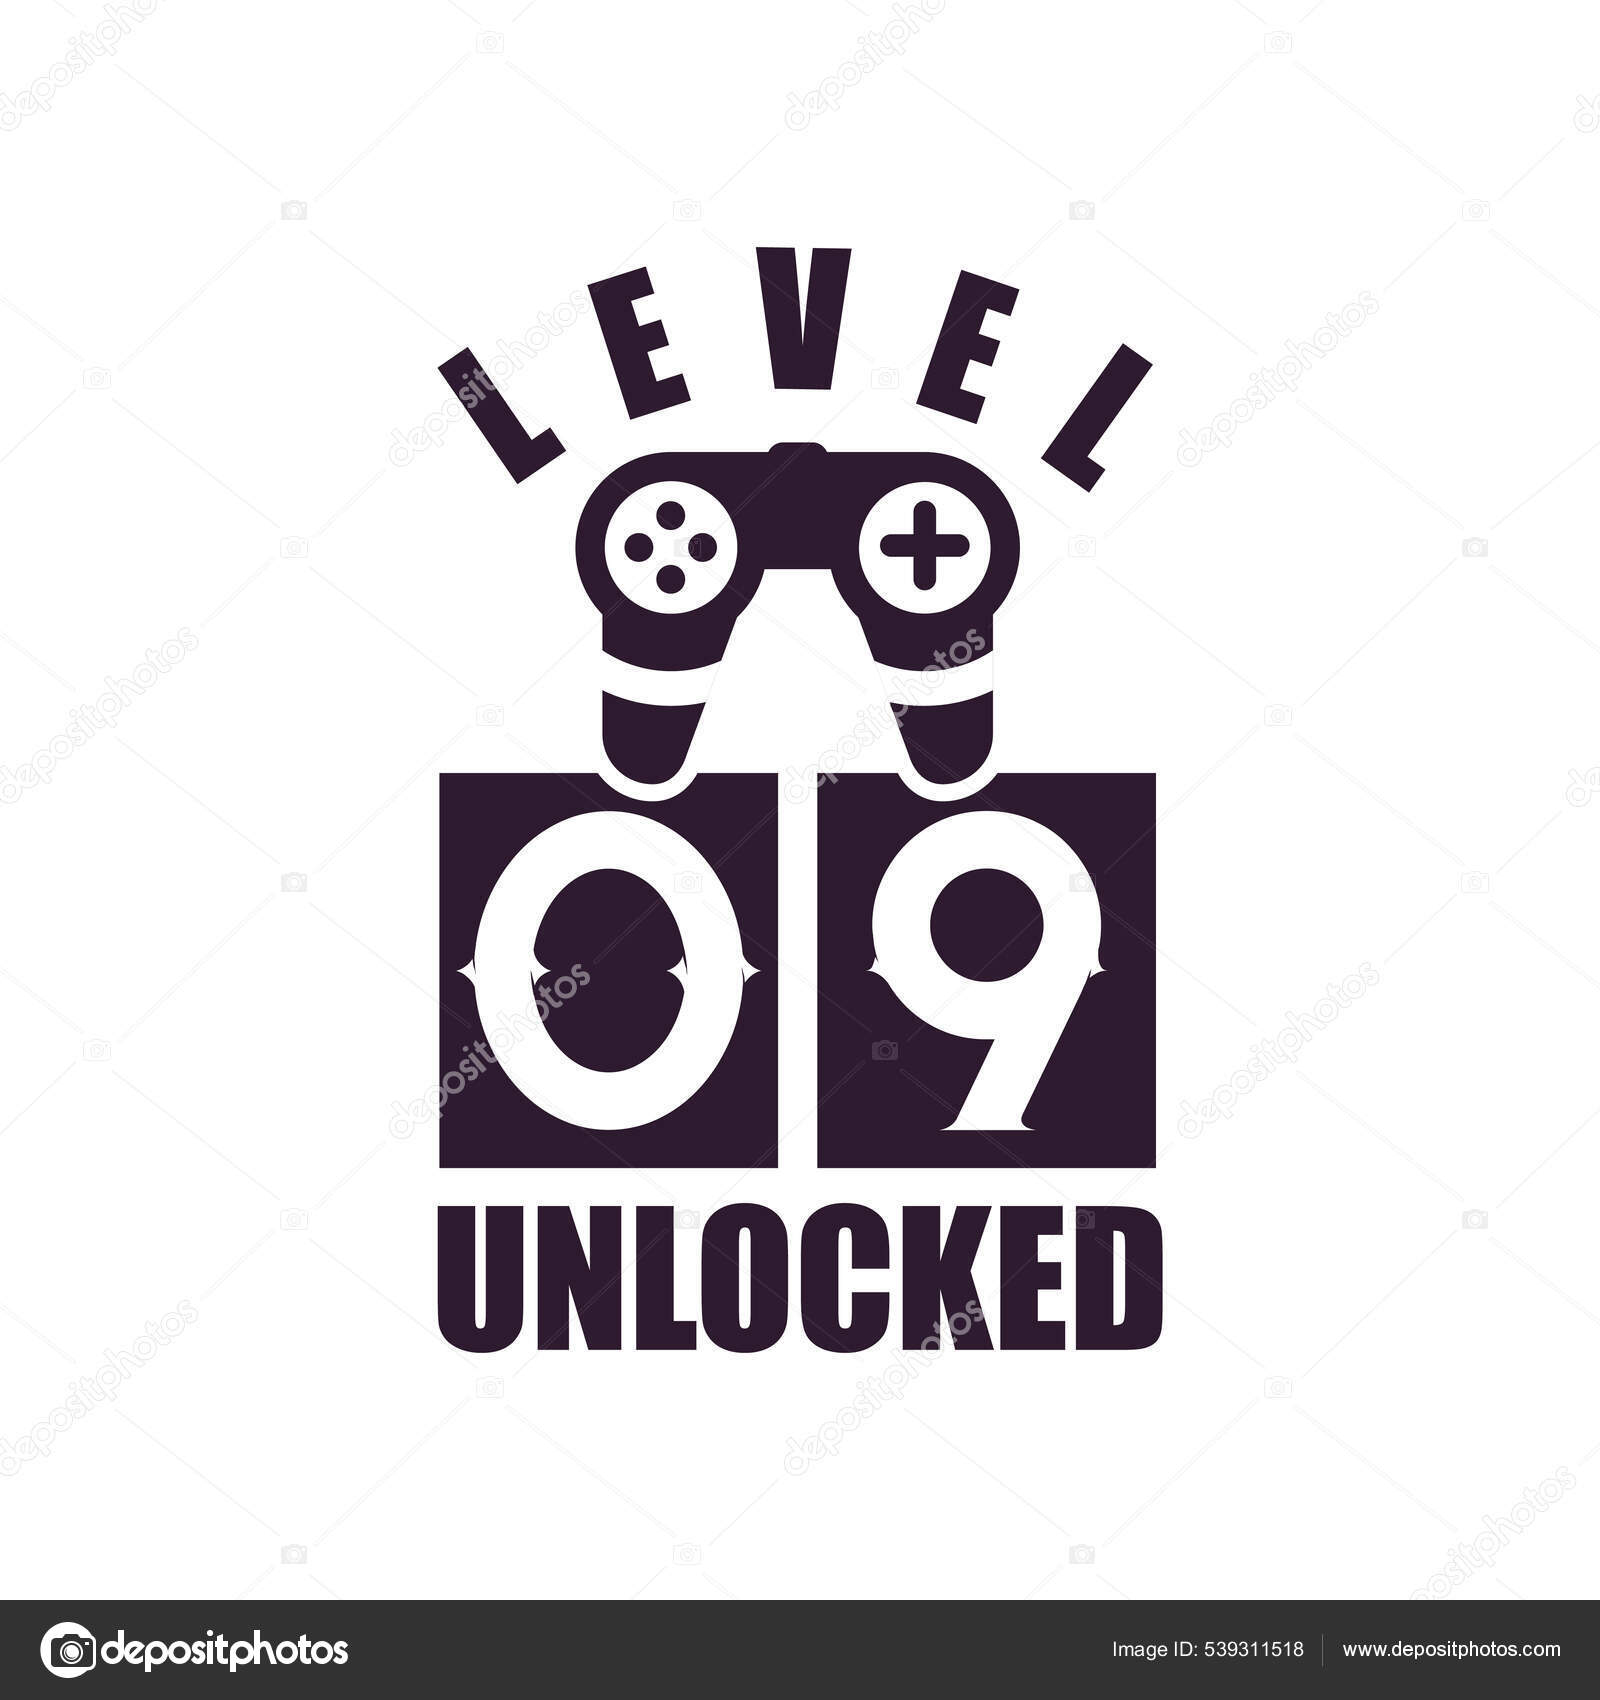 Unblocked Games Projetos  Fotos, vídeos, logotipos, ilustrações e